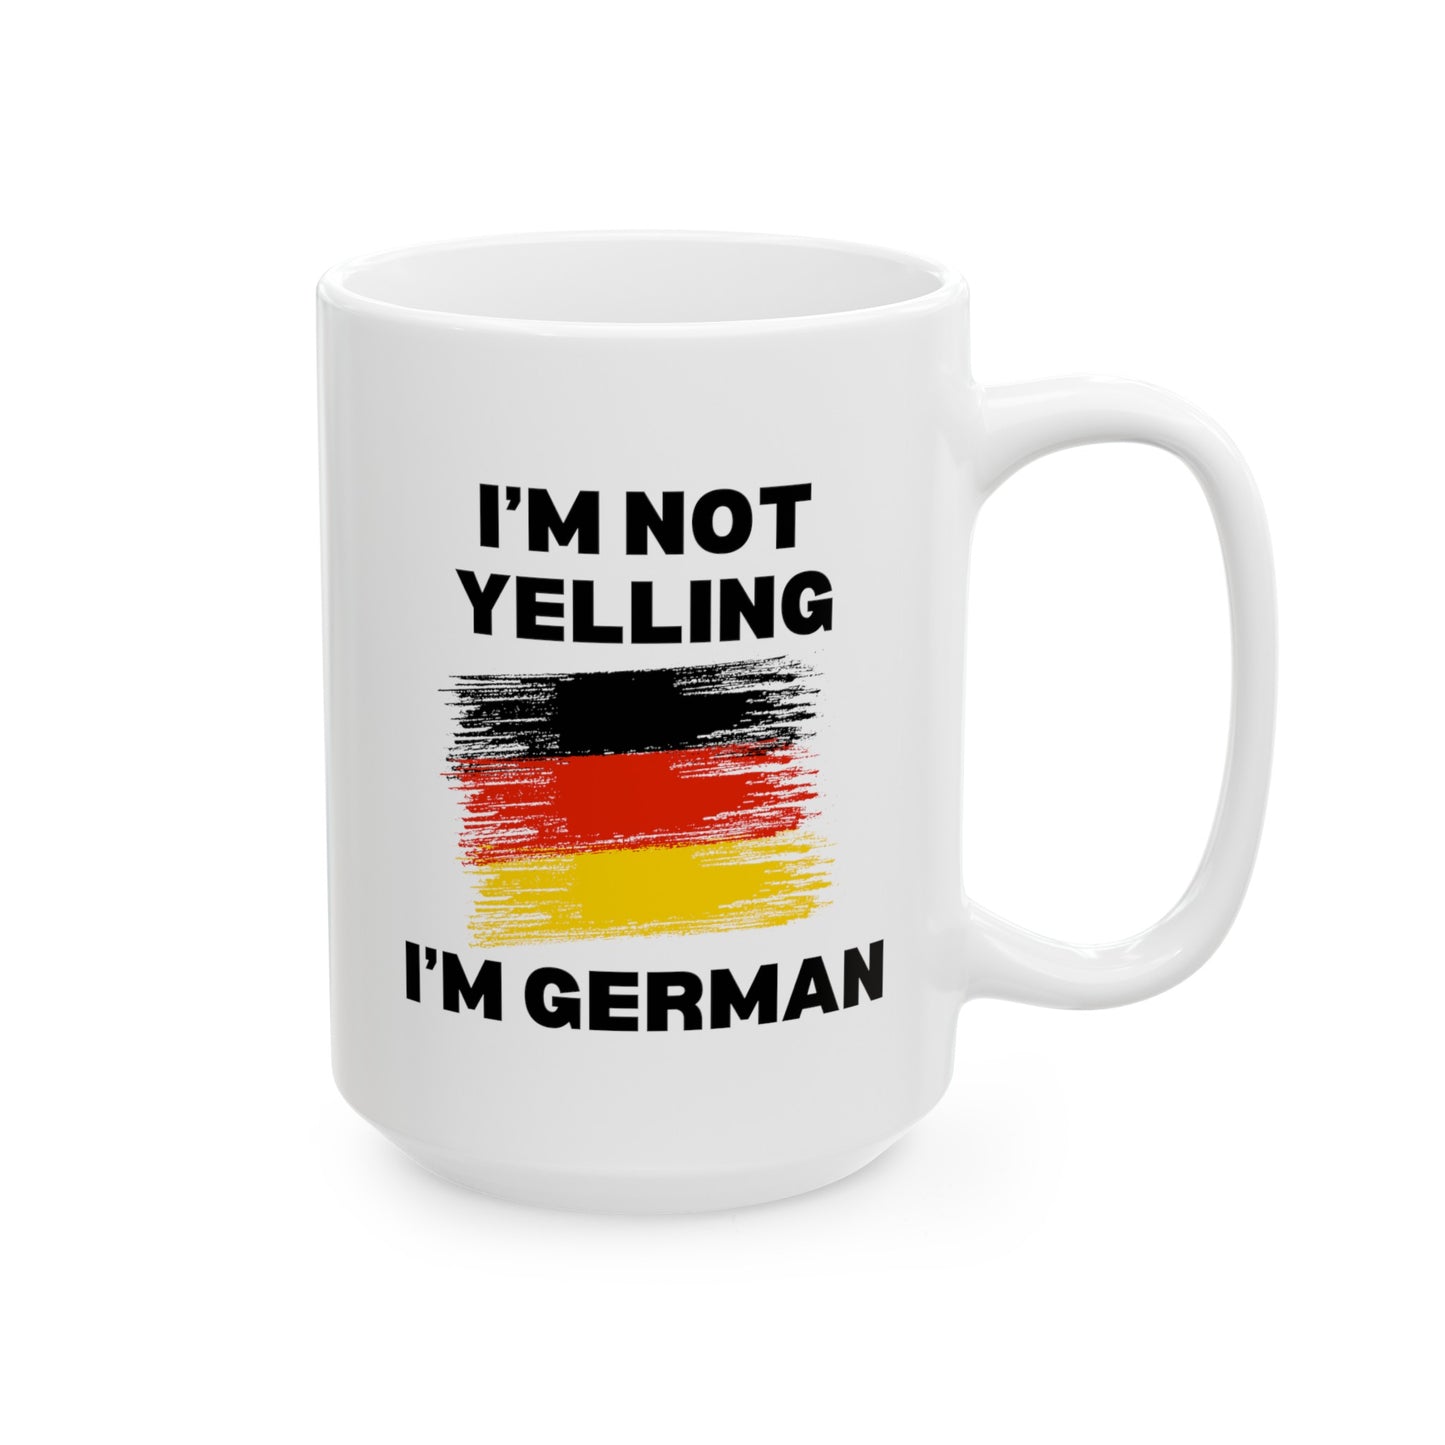 I'm Not Yelling I'm German 15oz white funny large coffee mug gift for deutsch friend flag germany deutschland birthday waveywares wavey wares wavywares wavy wares